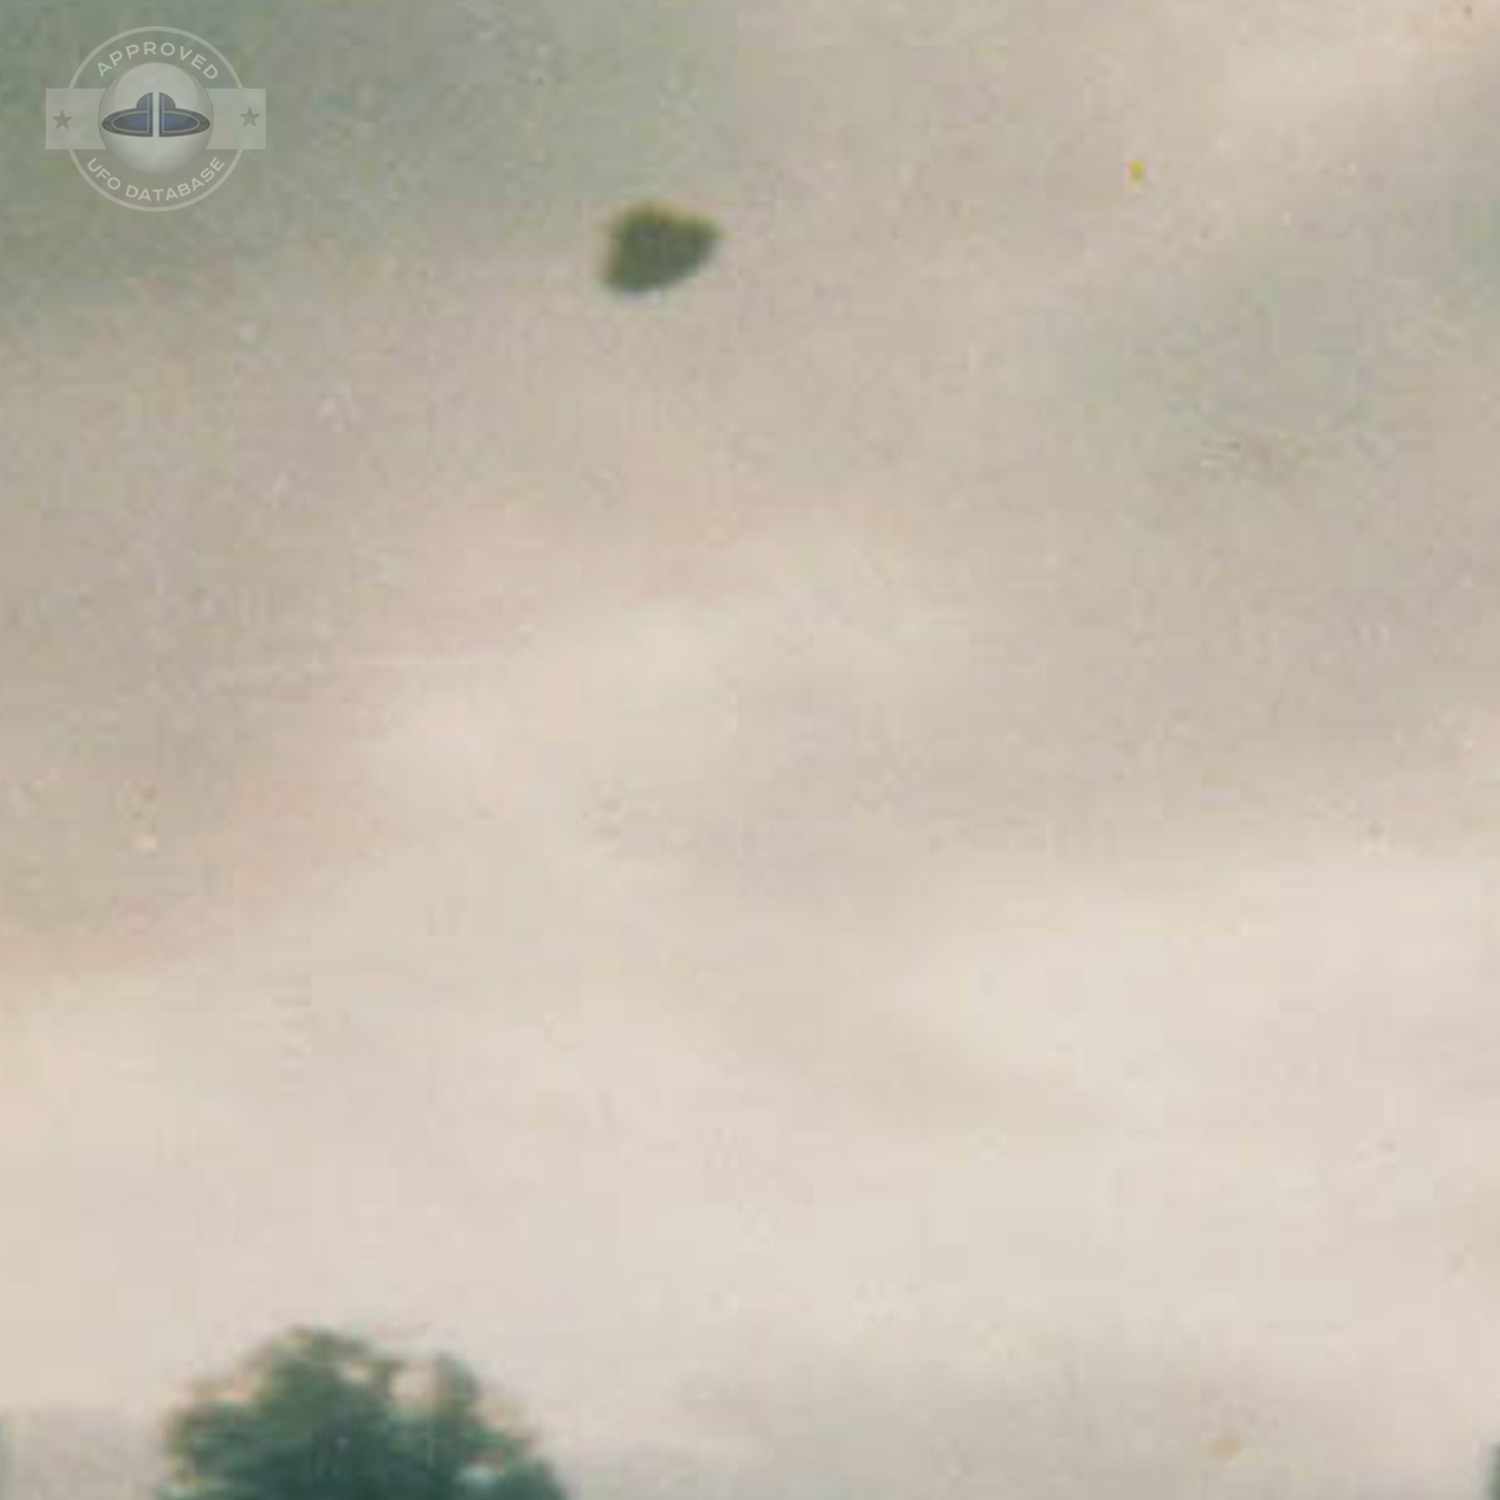 Grey UFO picture taken in a cloudy sky in San Carlos de Bariloche UFO Picture #22-2